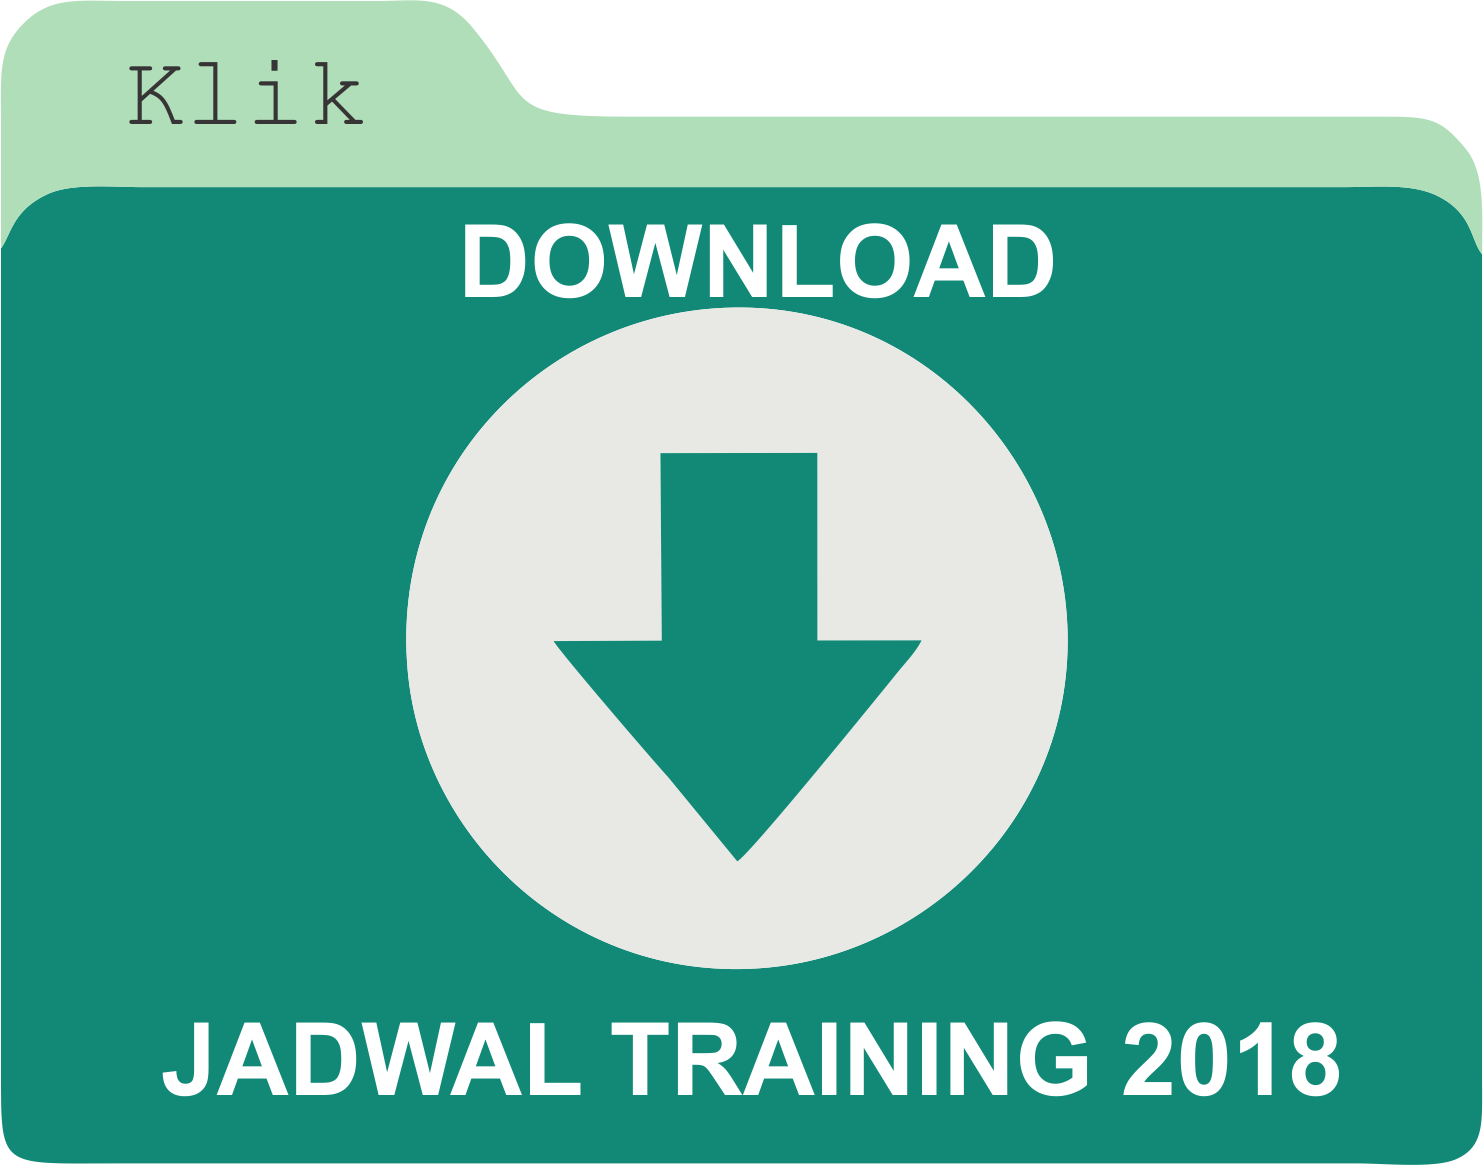 Download Jadwal Training